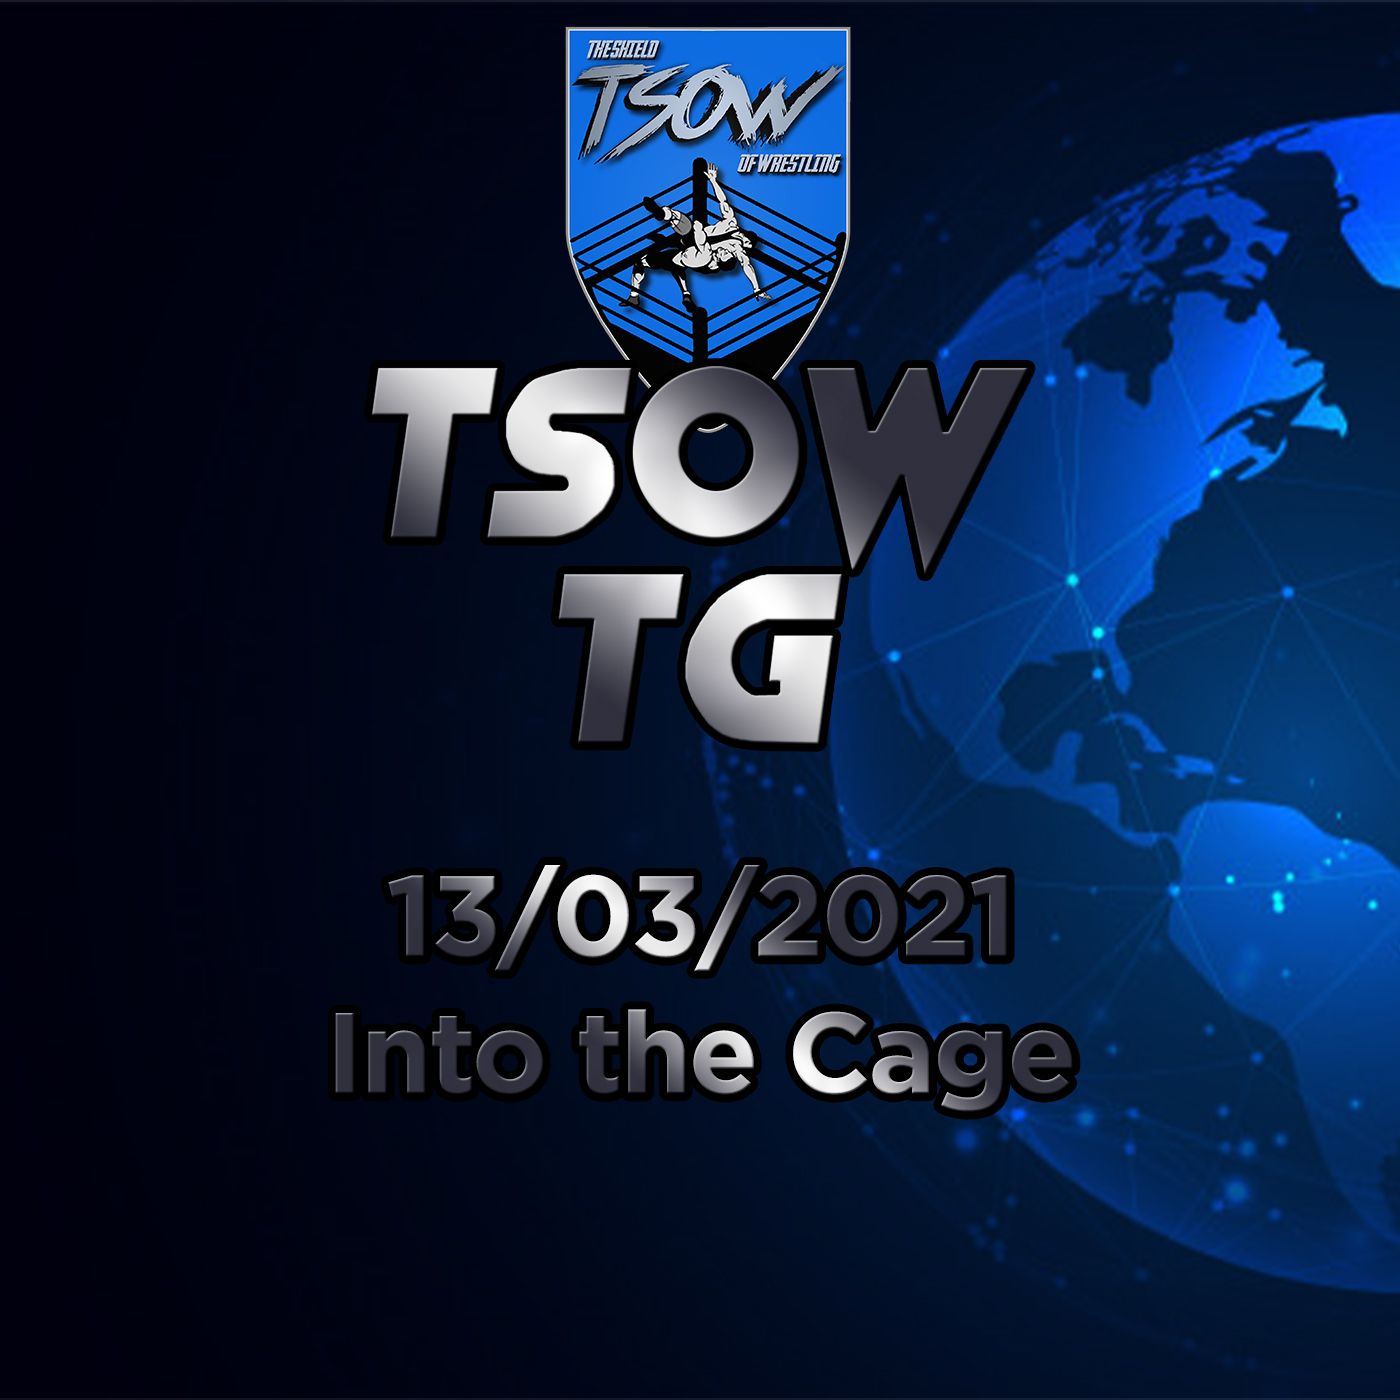 TSOW TG 13/03/2021 - Into the Cage